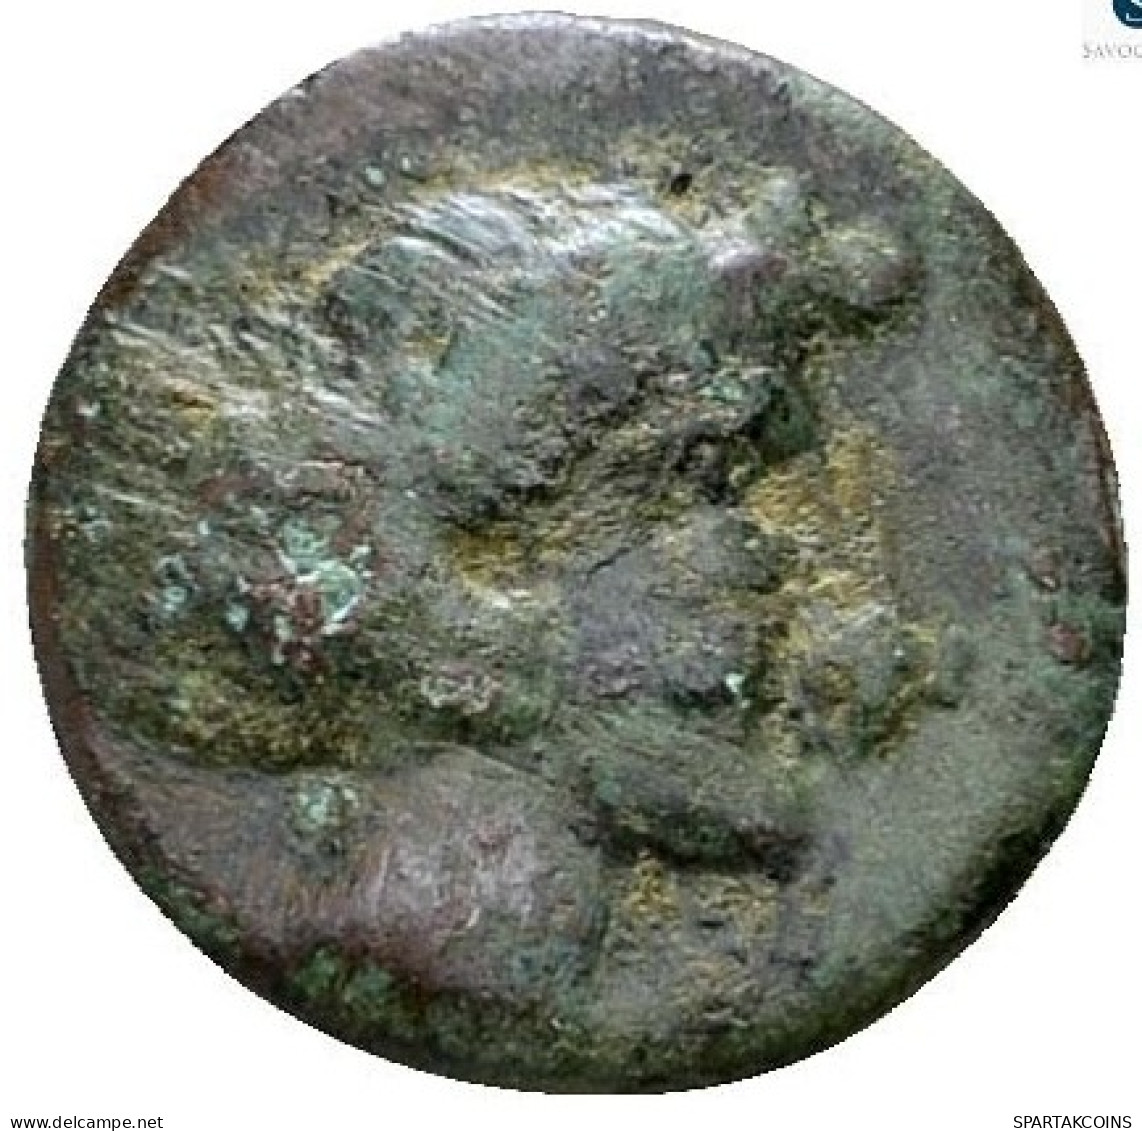 THESSALY LARISSA NYMPH HORSE PFERD Bronze 3.98g/17mm #ANC12399.9.E.A - Griechische Münzen